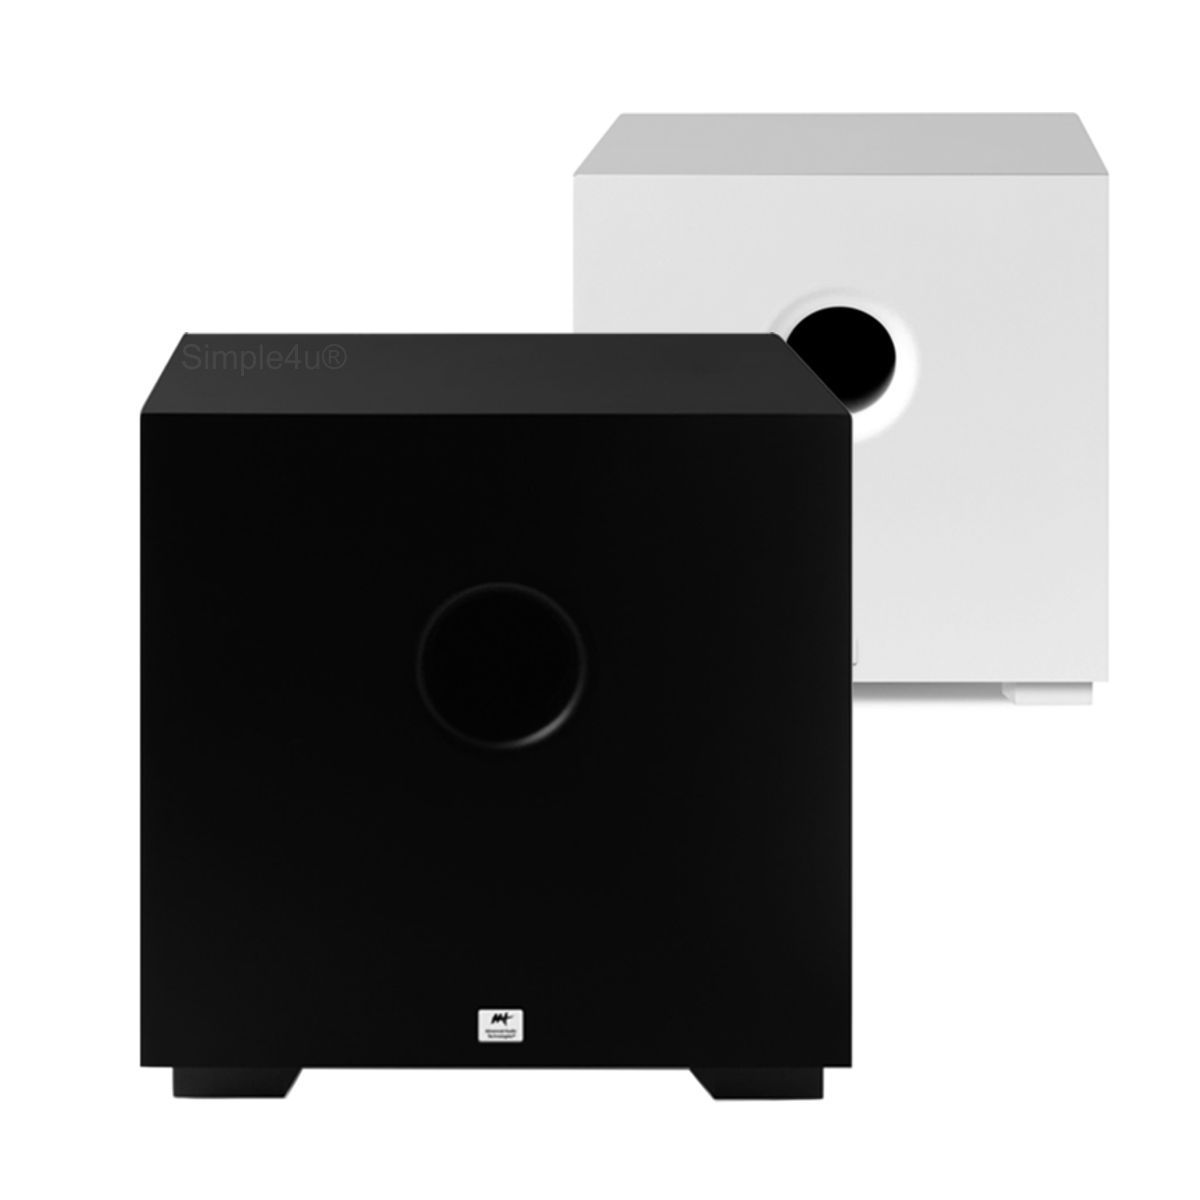 Kit 7.1 Caixa de Embutir no Gesso LCR-A100 + LR-E100 + Subwoofer Compact Cube 8" AAT